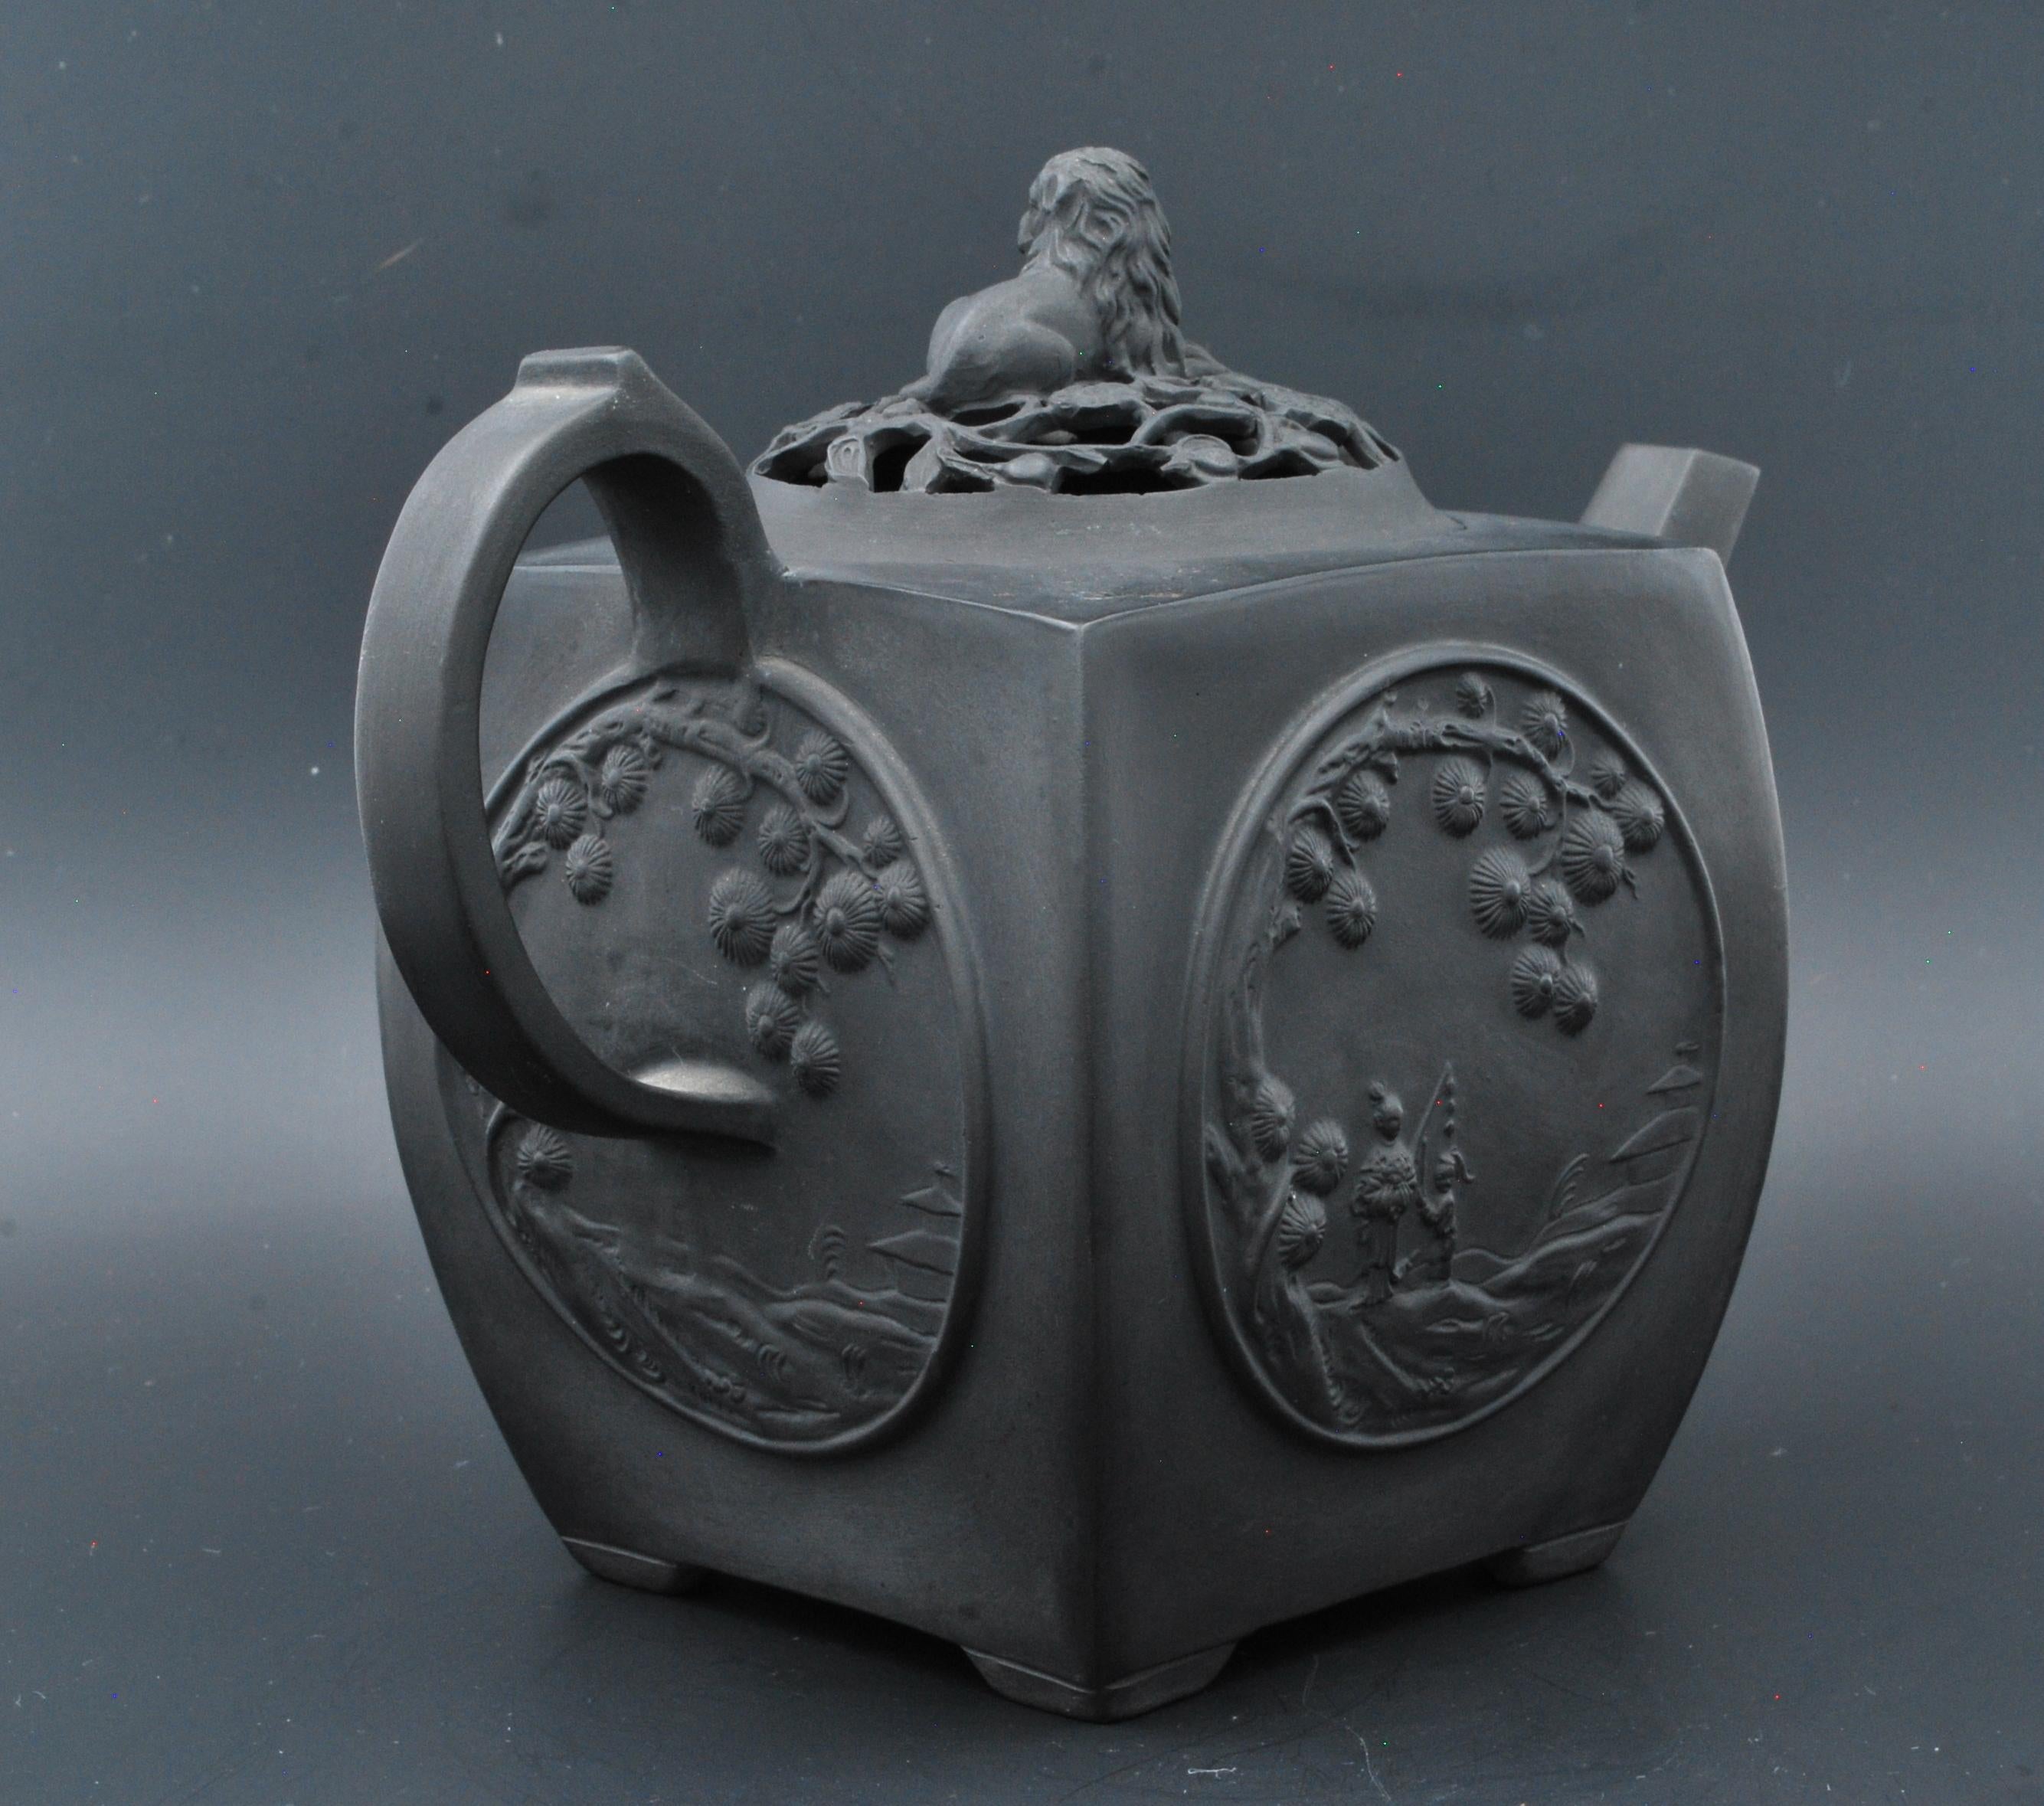 18th Century Black Basalt Teapot with Pierced Lid, Turner, C1790